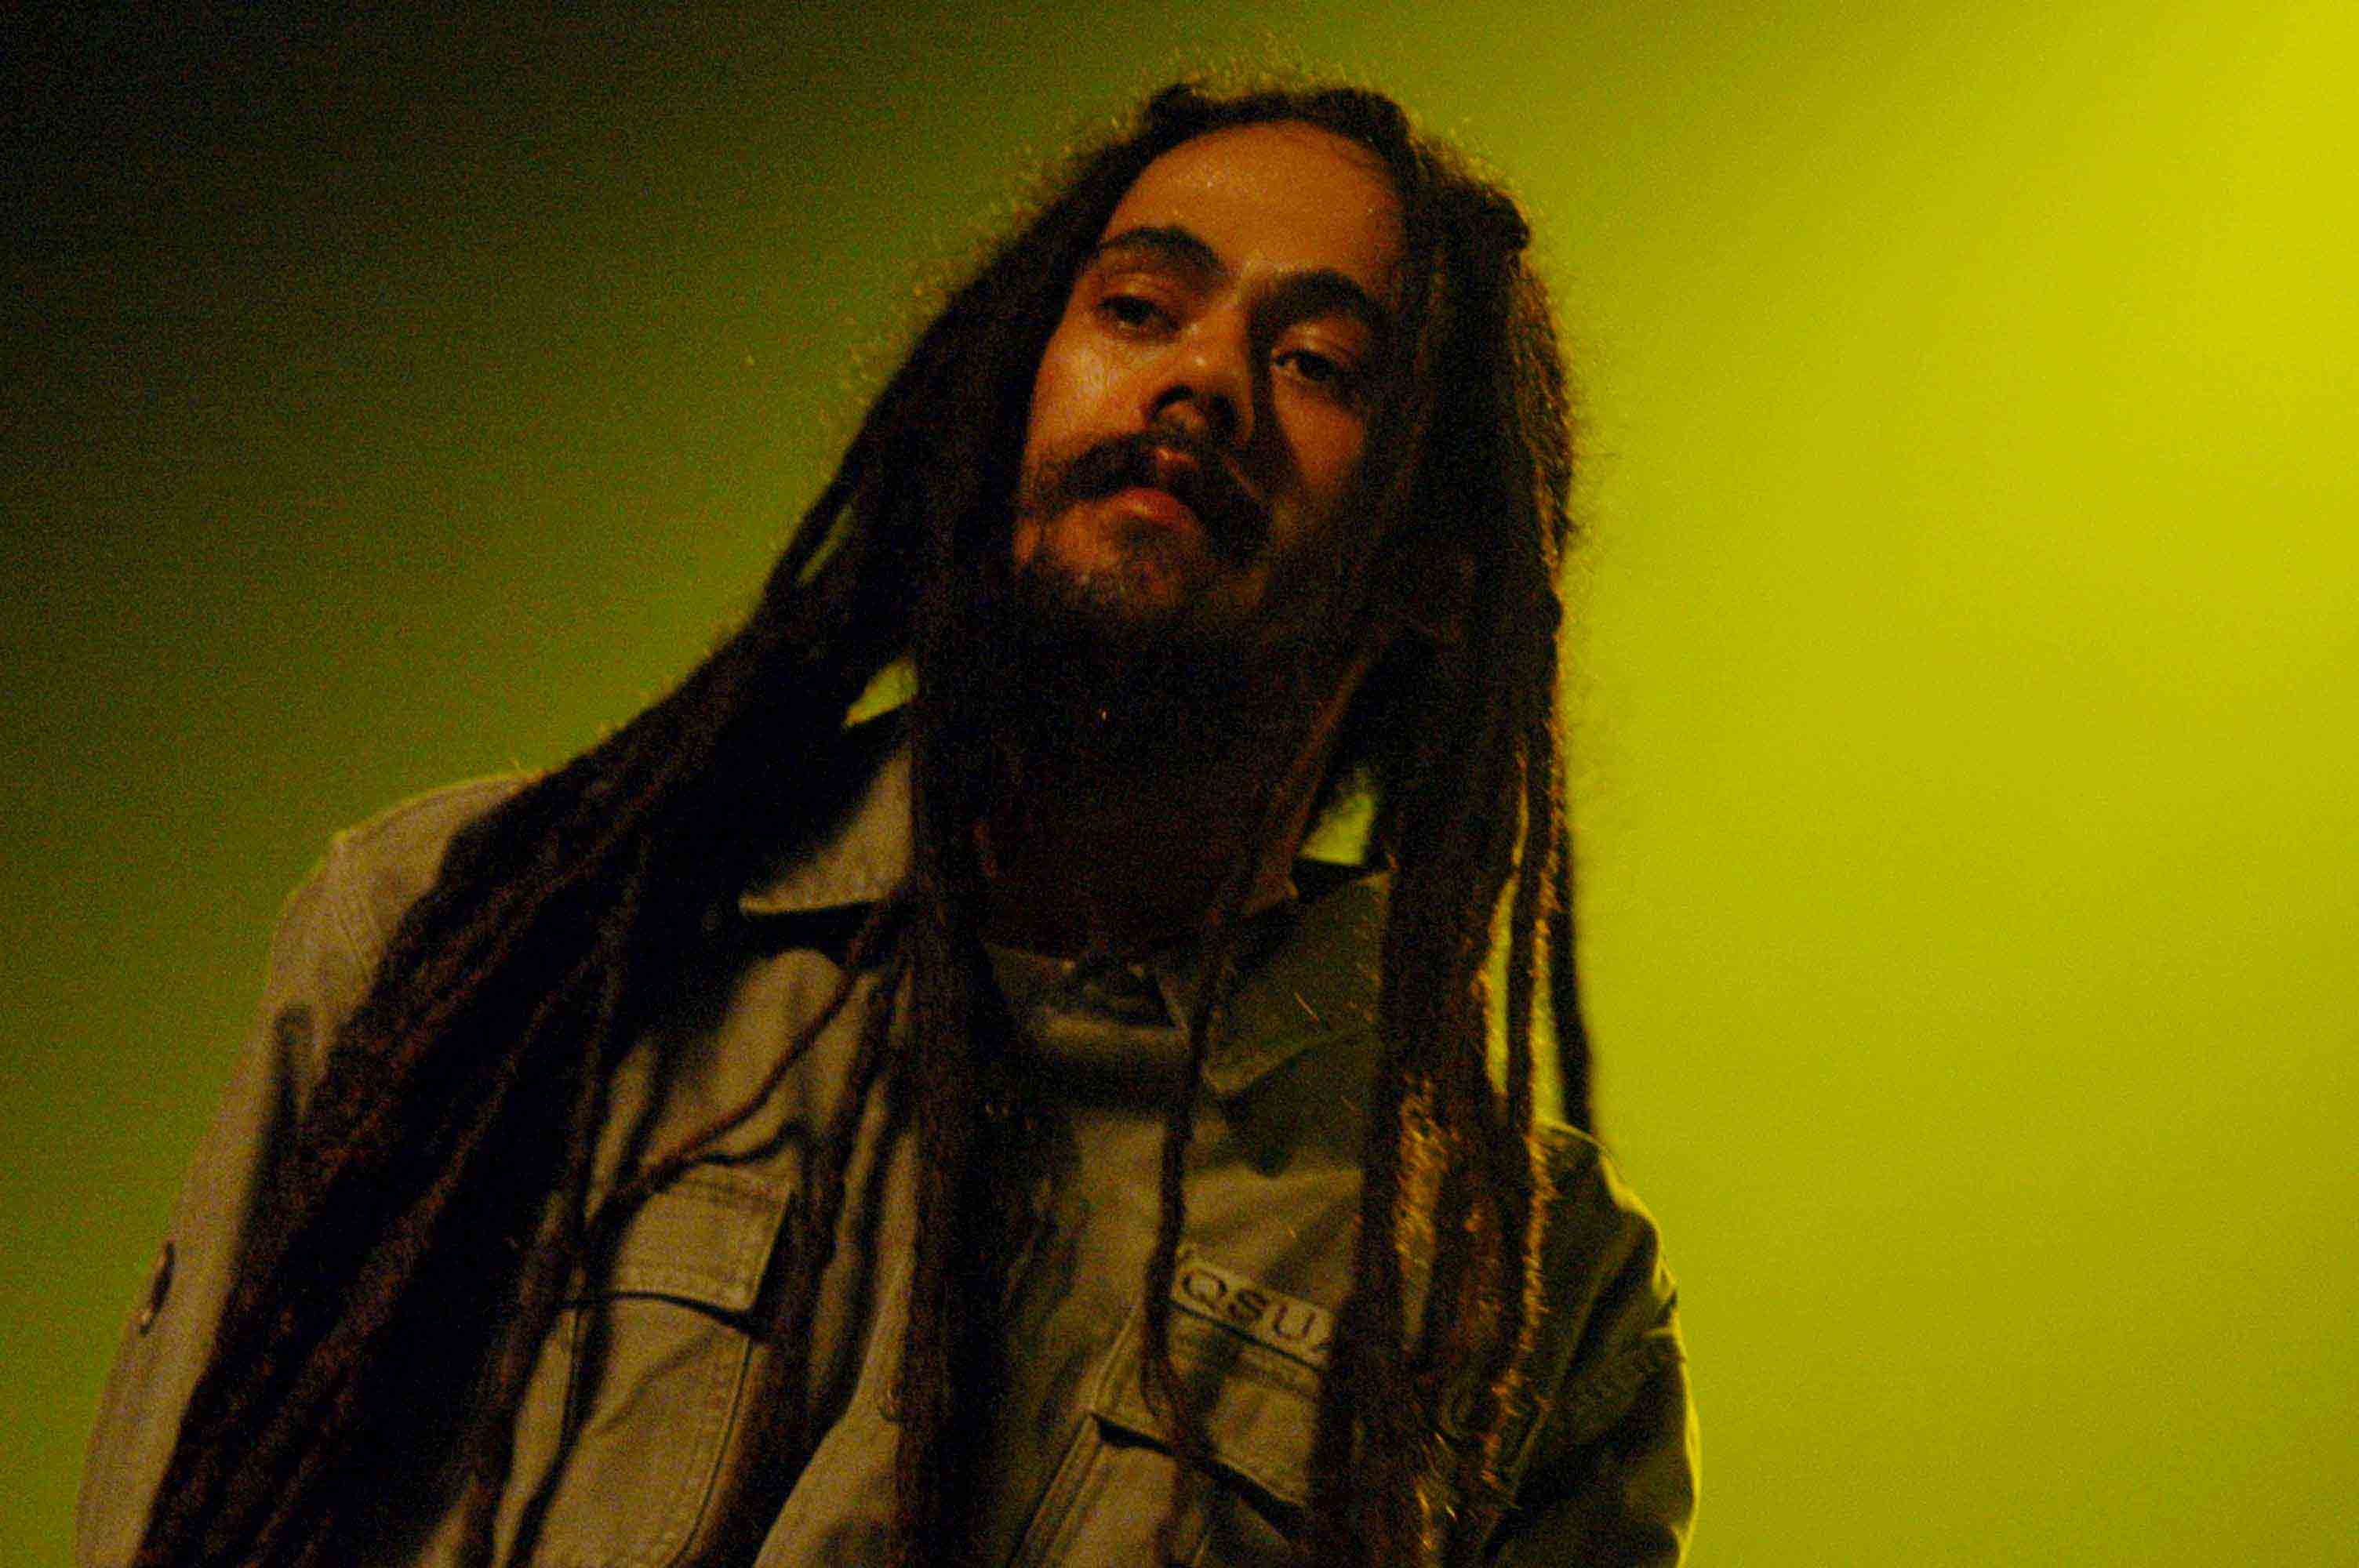 Rototom_Primera actuación en España de Damian Marley